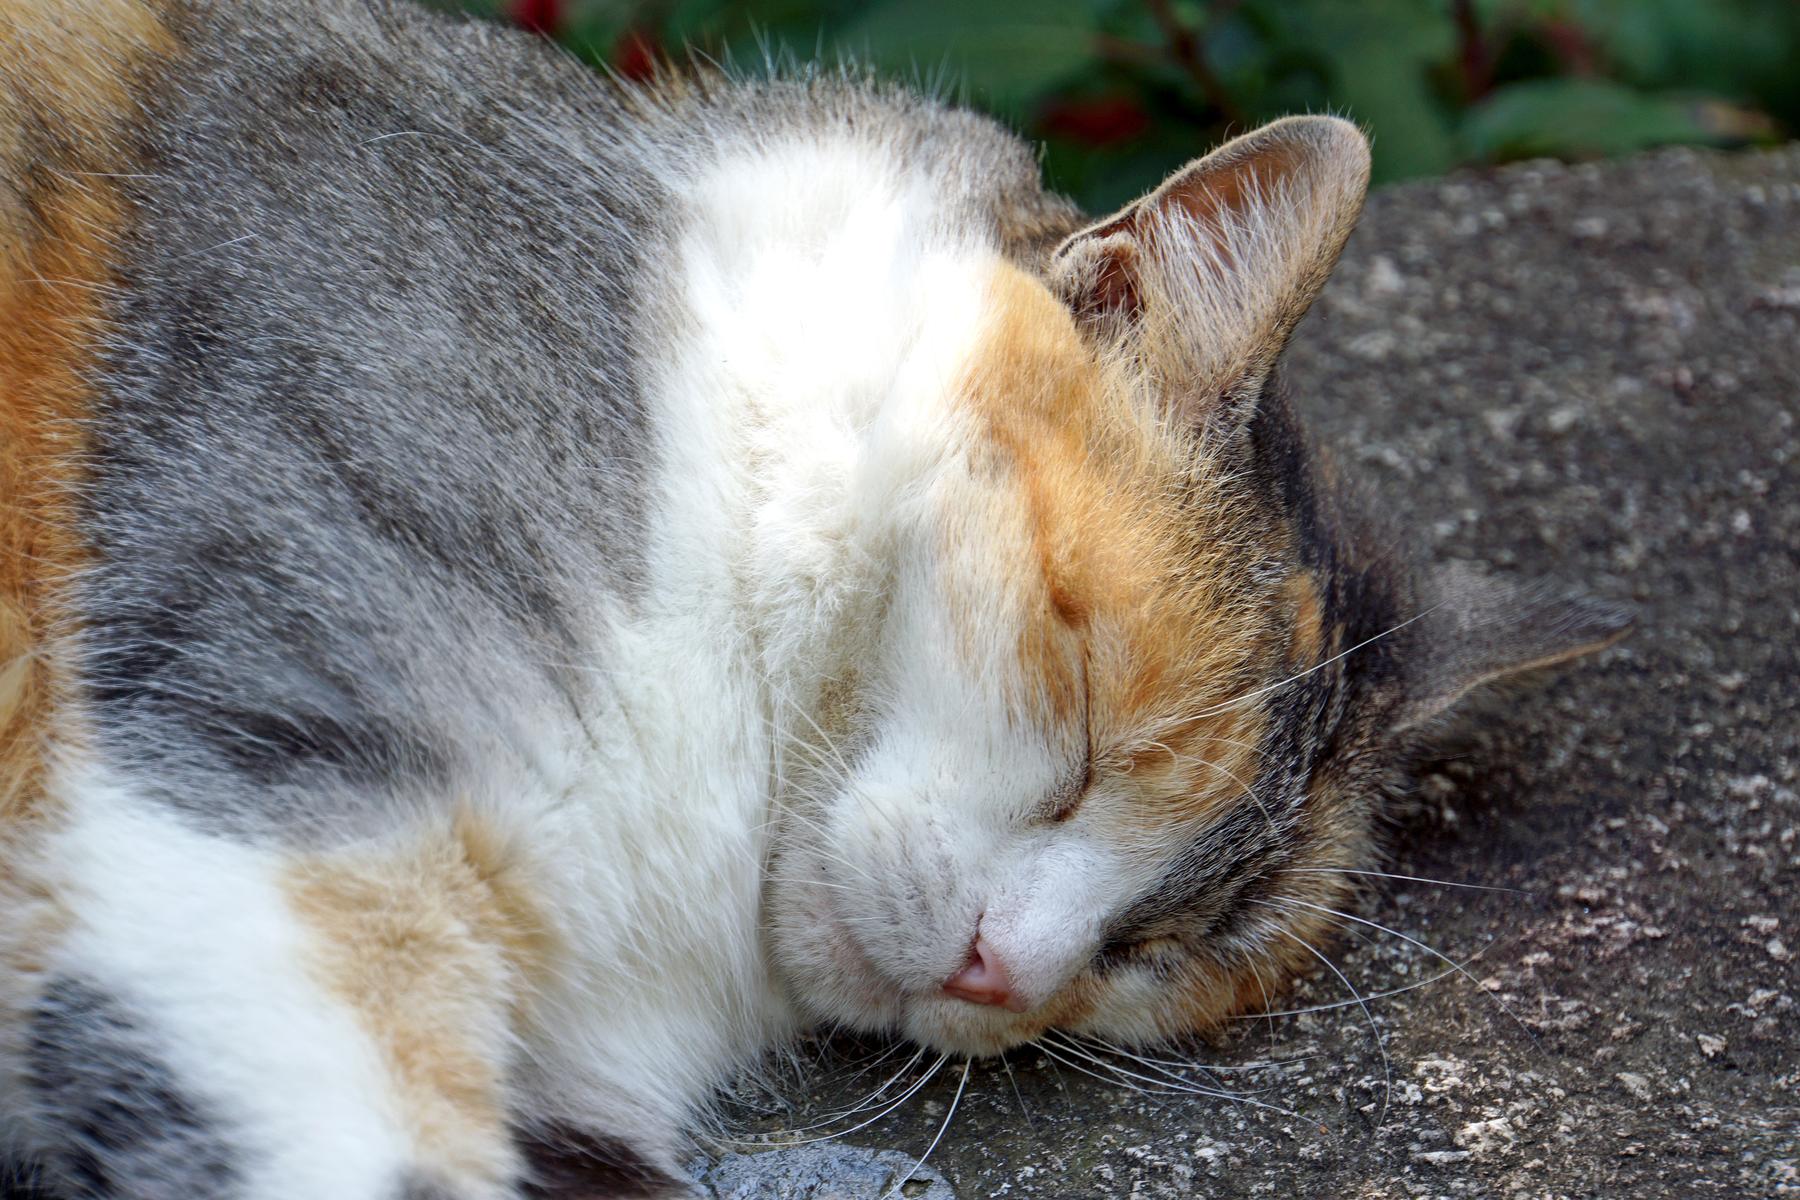 File:Italy-02045 - Sleep Tight (22805224365).jpg - a cat sleeping on a rock